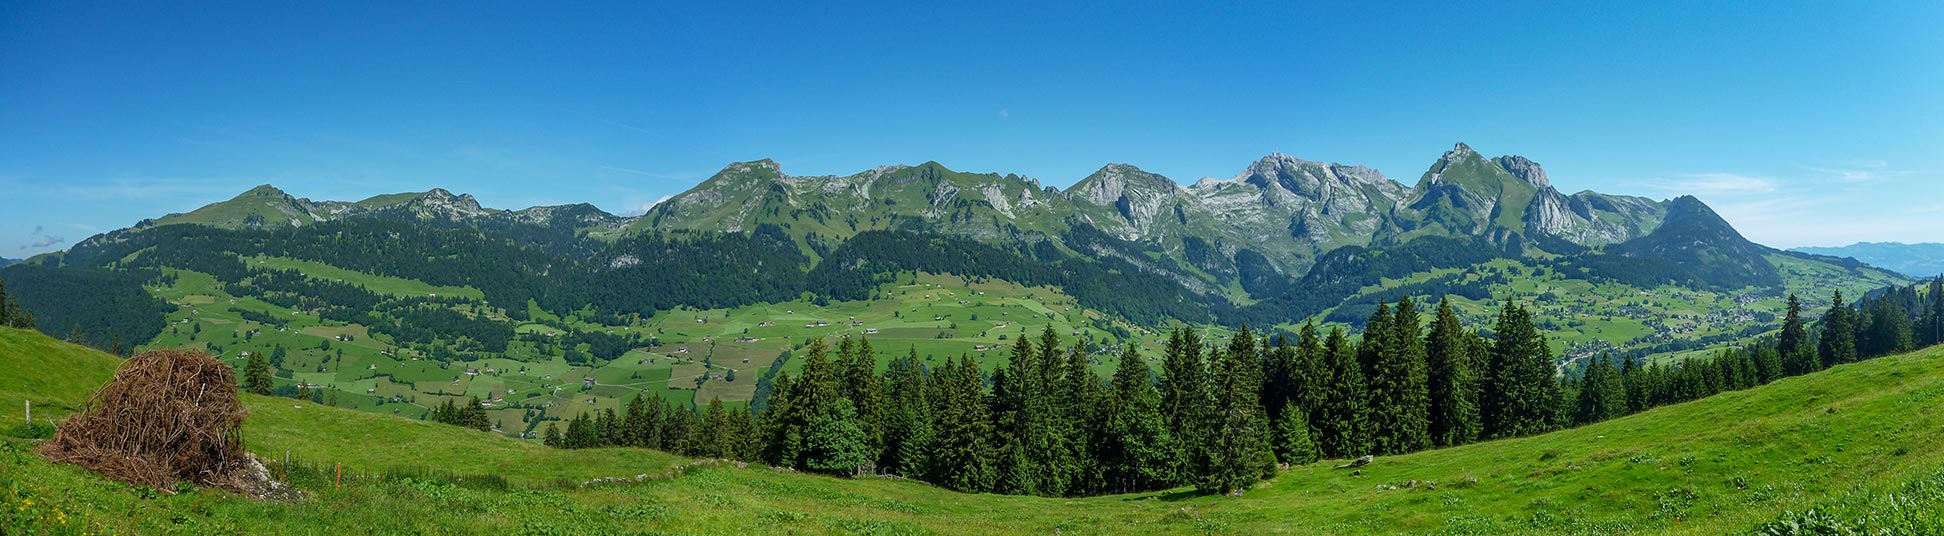 View of the Alpstein mountain range in the Swiss cantons of Appenzell Innerrhoden, Appenzell Ausserrhoden and St. Gallen